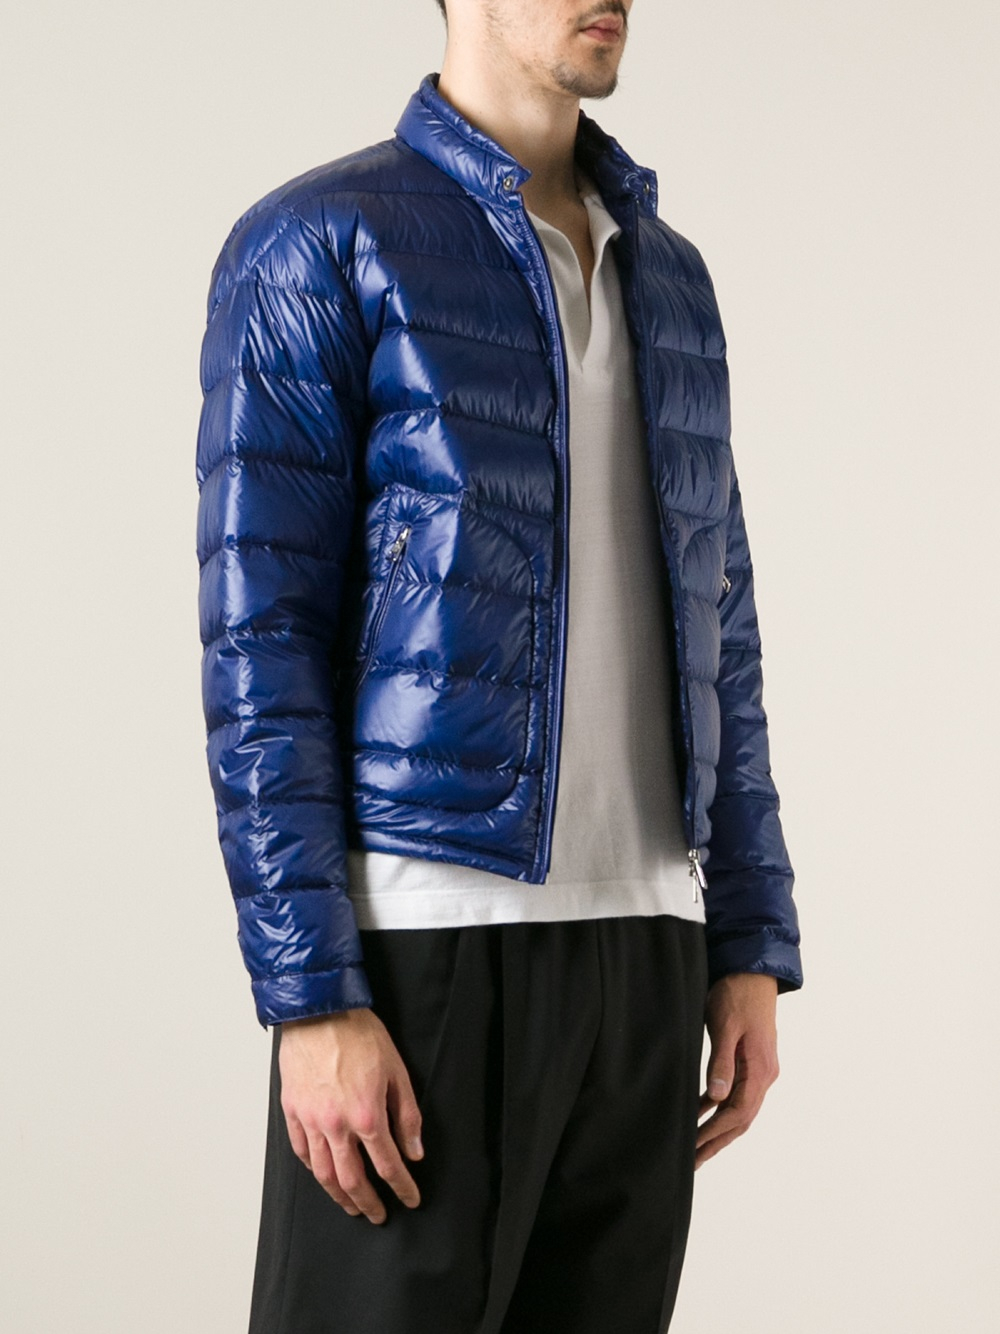 Moncler Padded Jacket in Blue for Men - Lyst